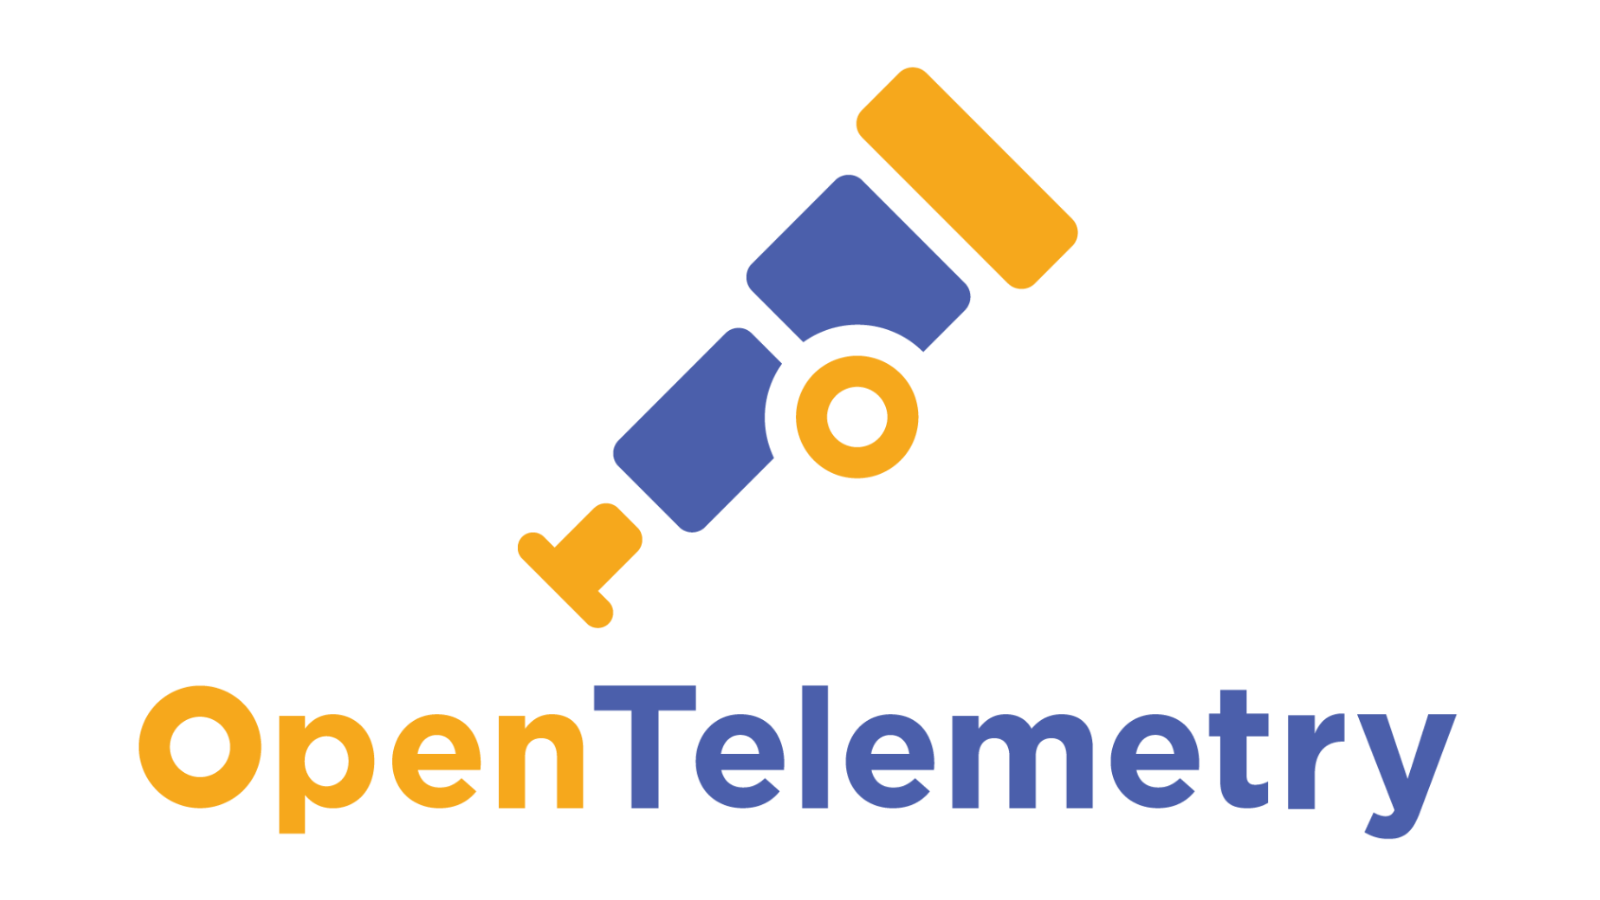 Open Telemetry